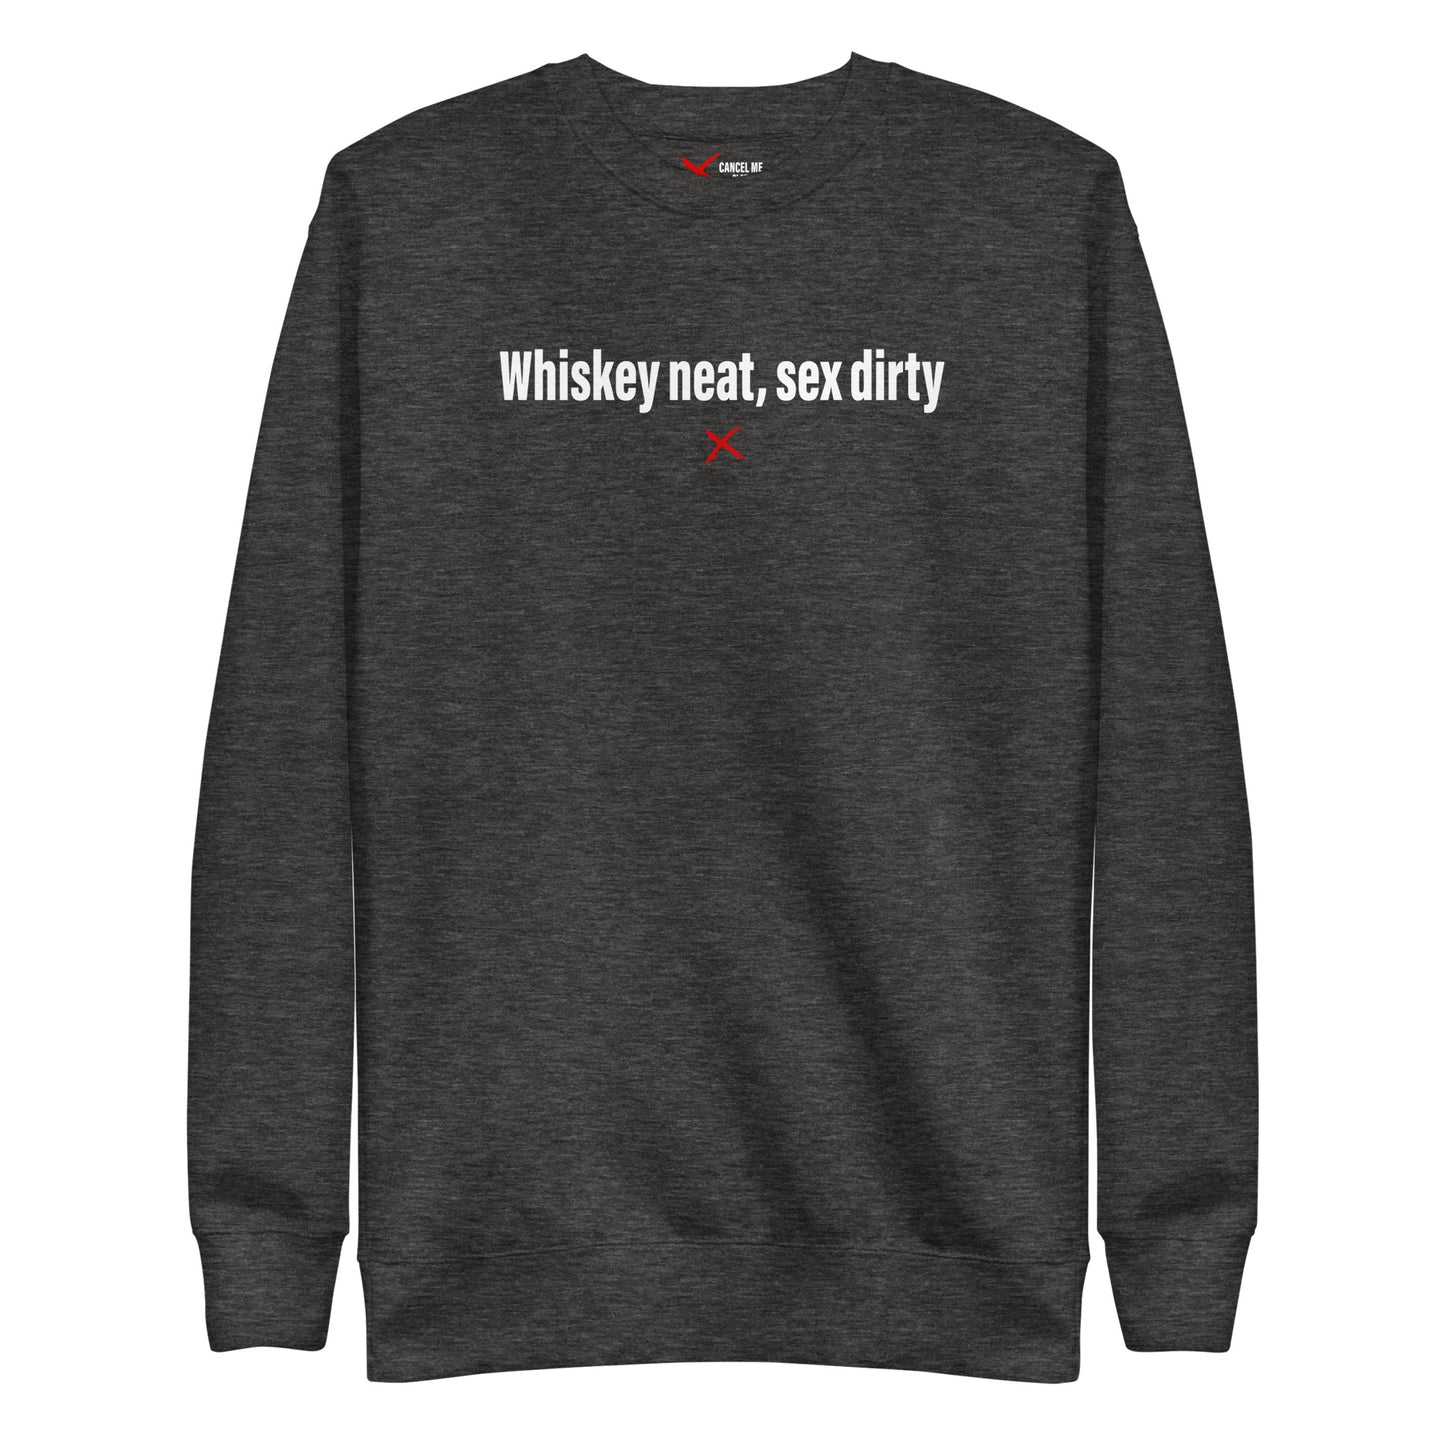 Whiskey neat, sex dirty - Sweatshirt